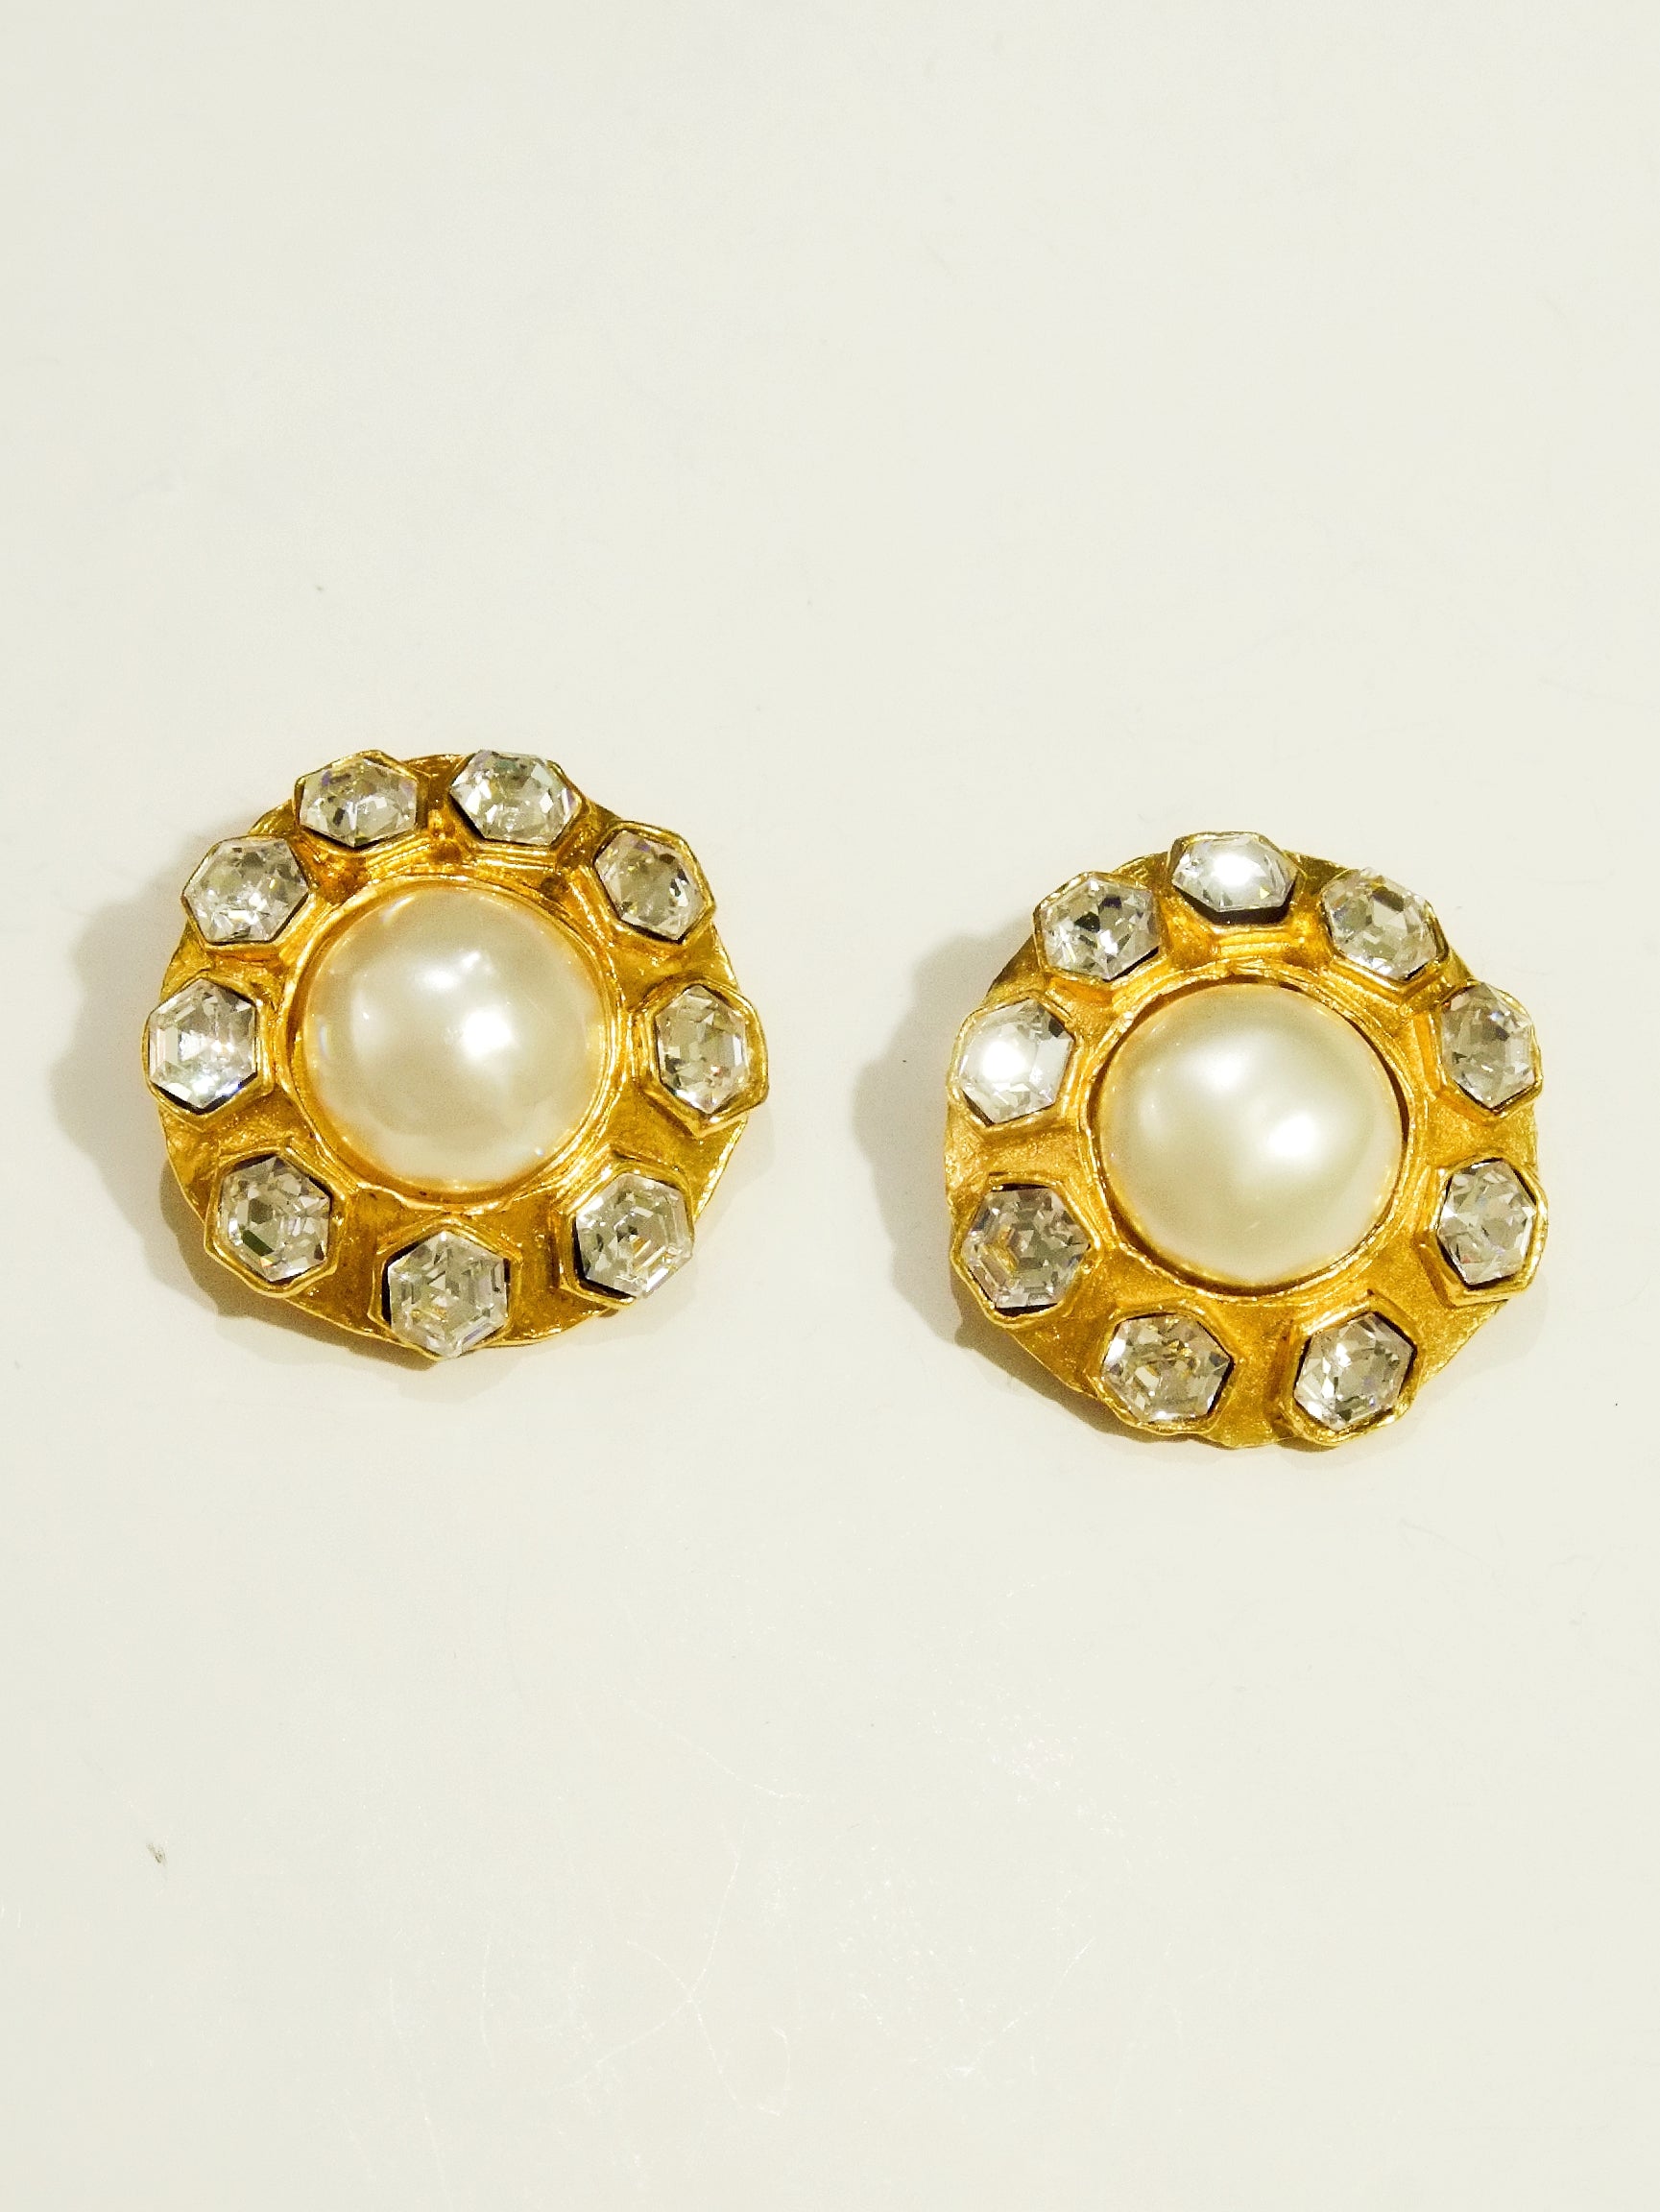 vintage chanel cc logo earrings